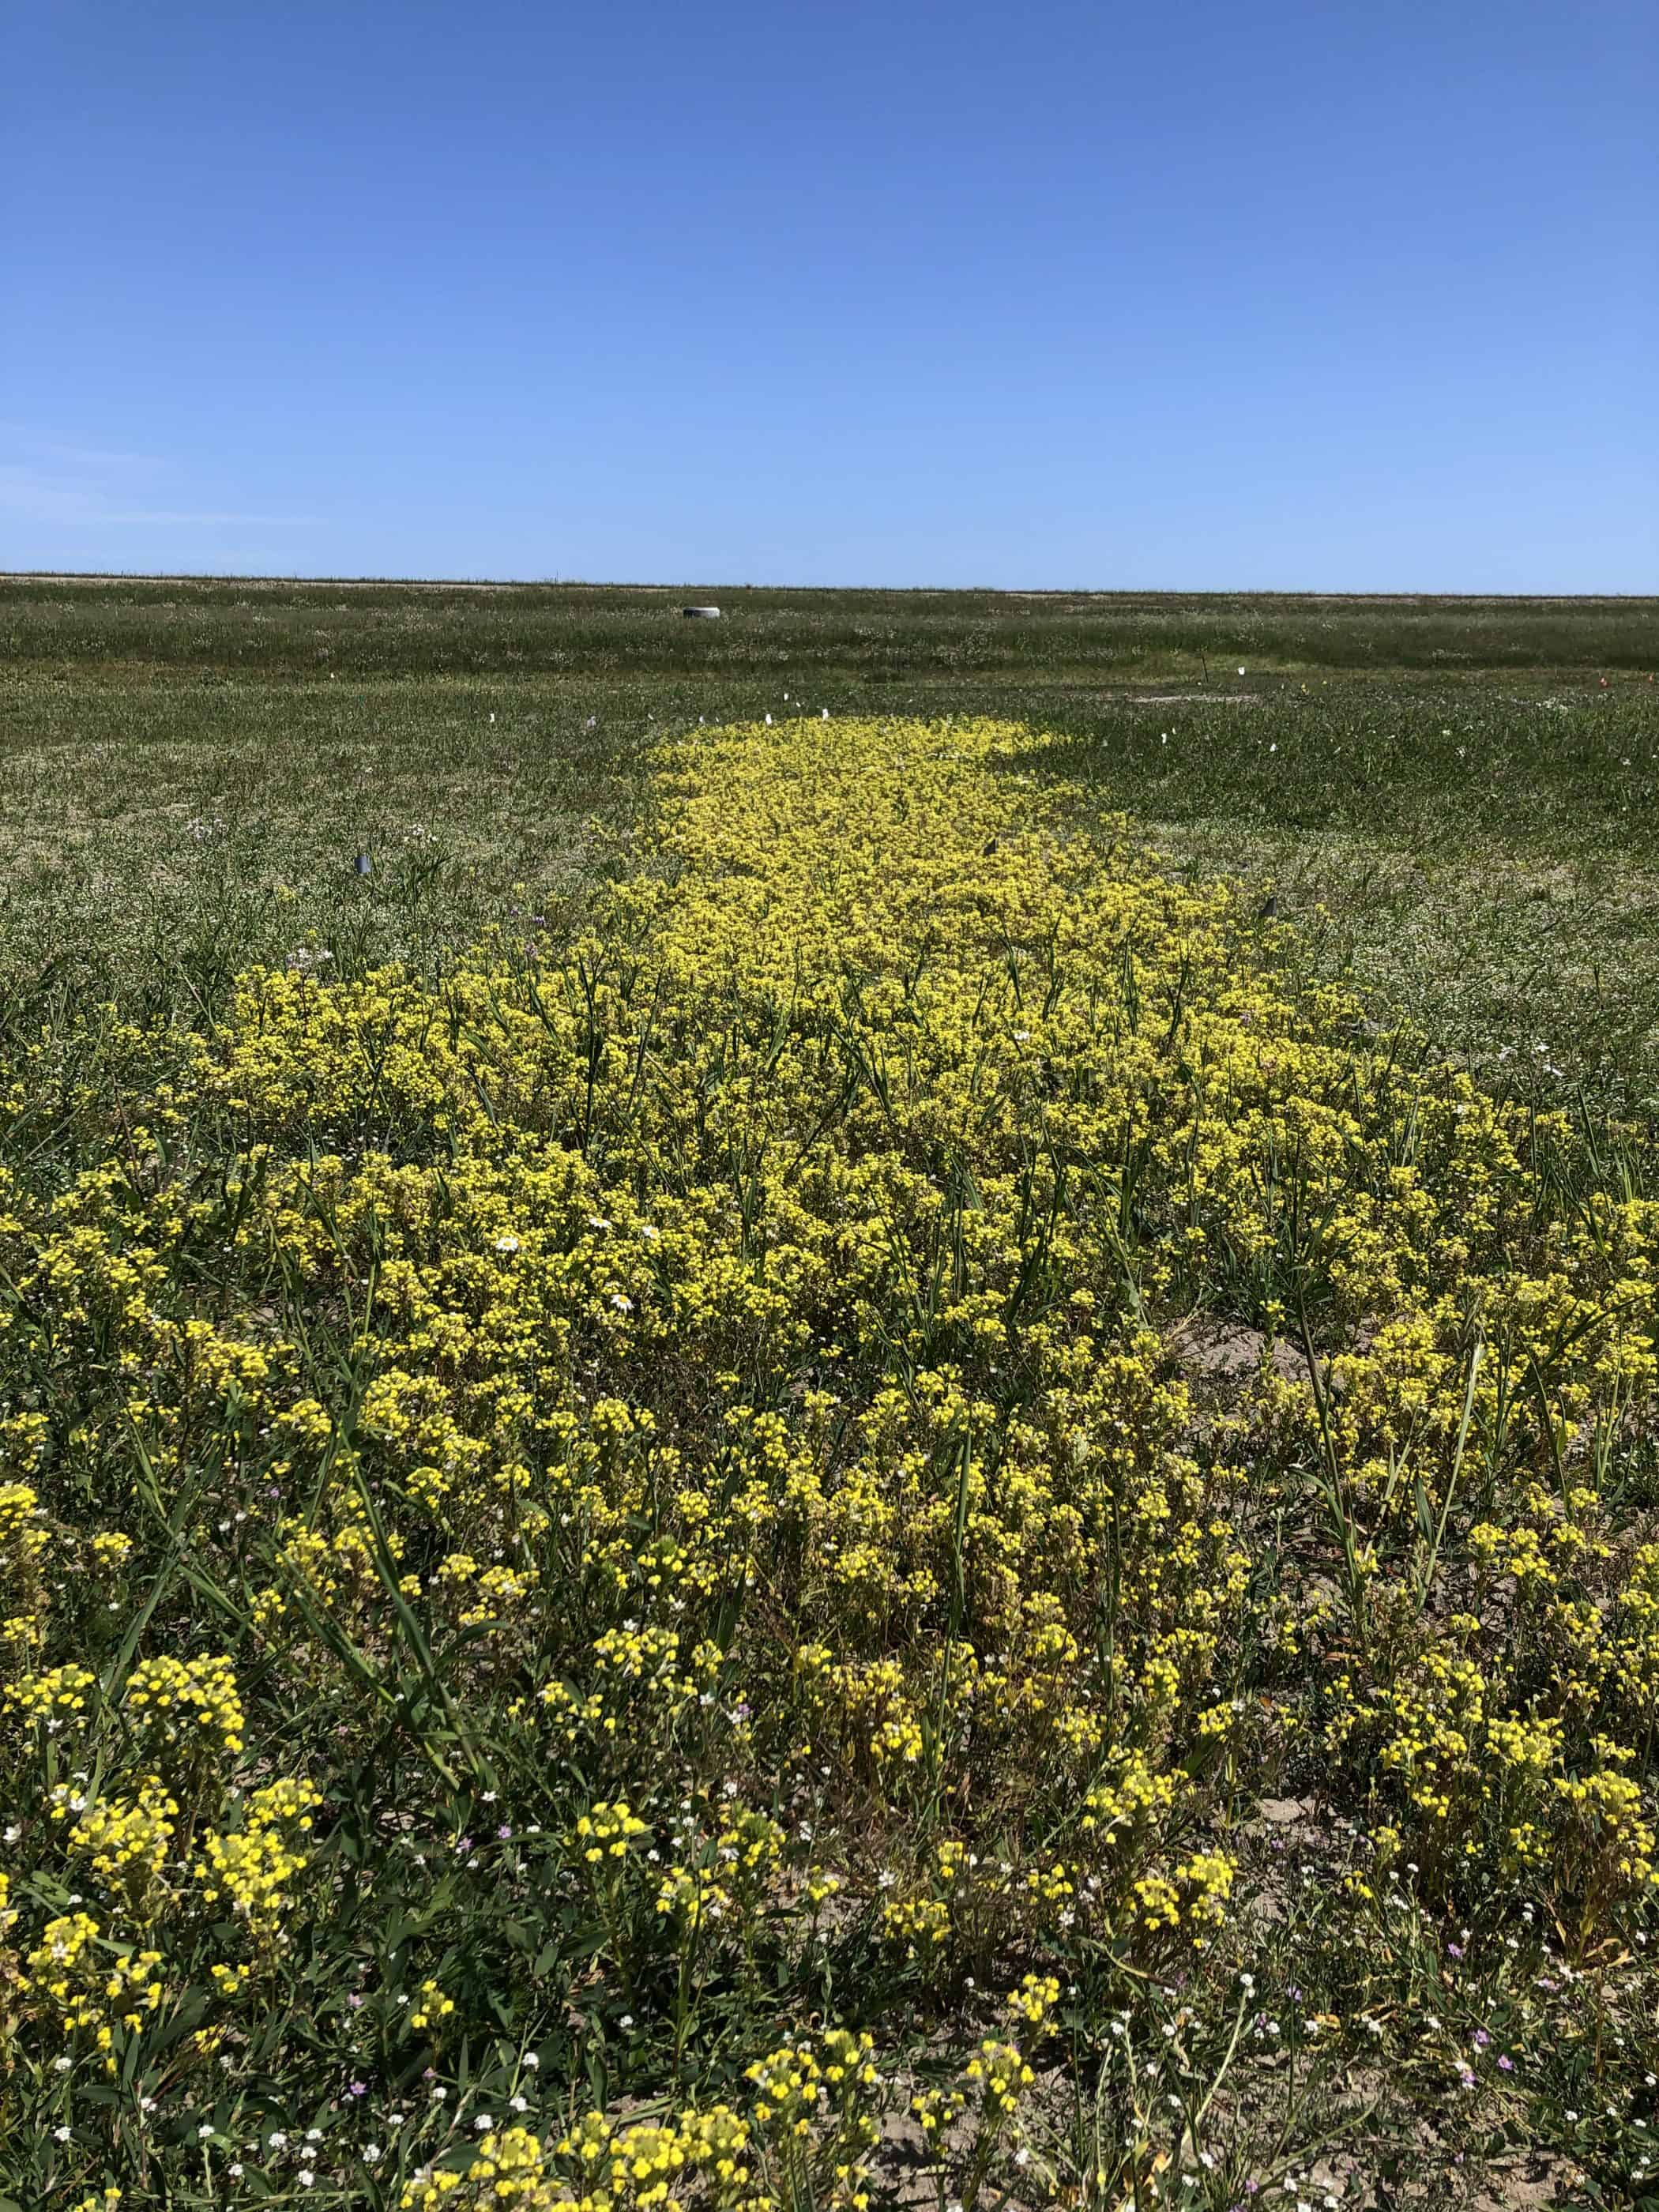 Seasonal wetland with lush yellow flowers